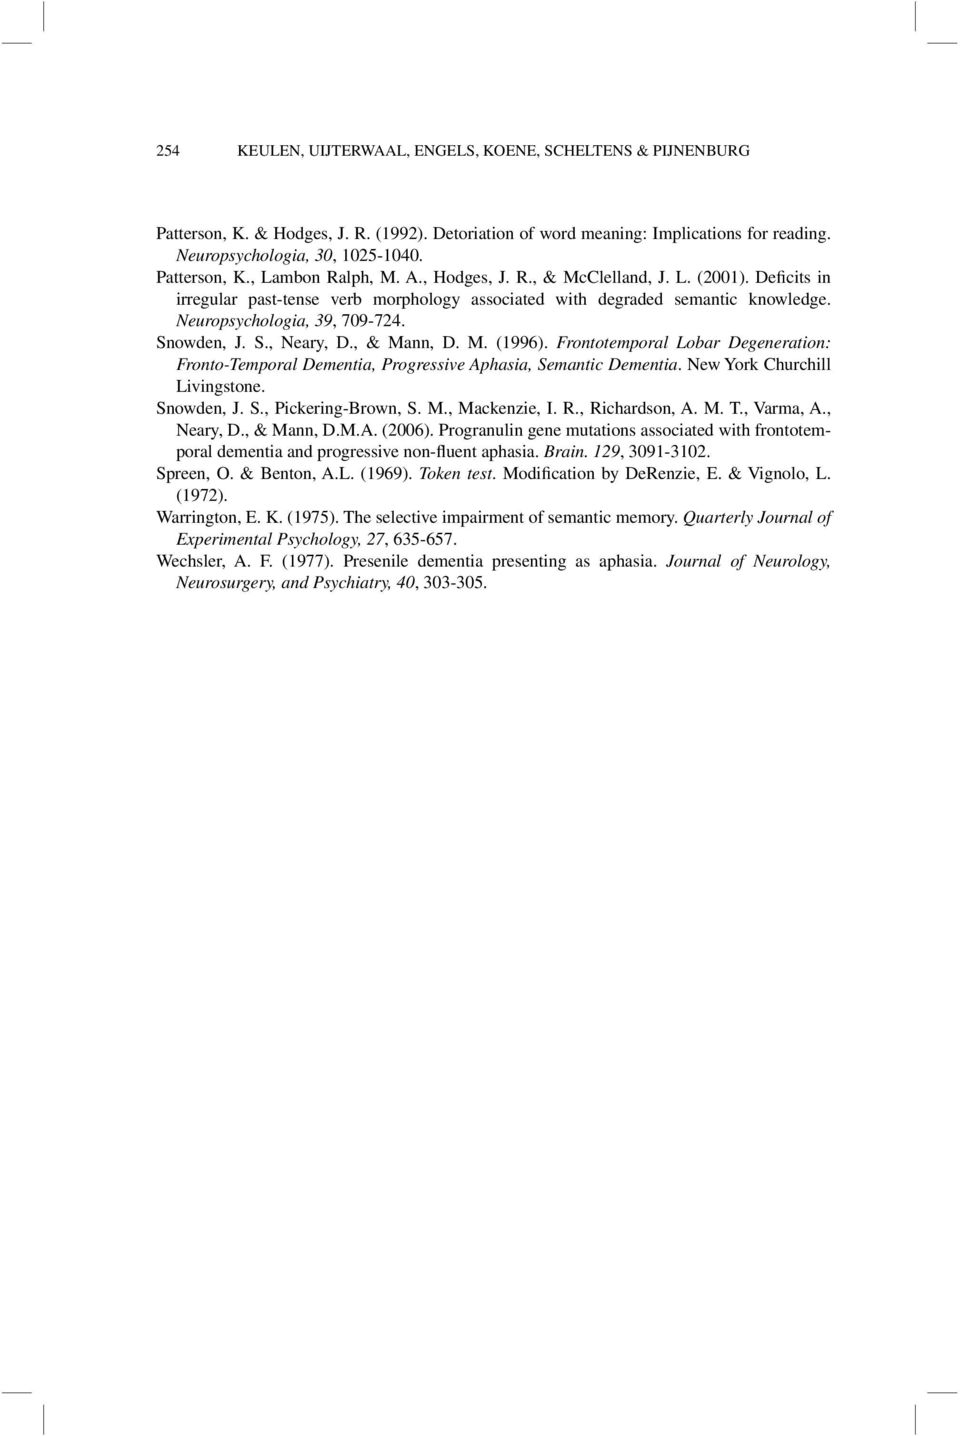 Neuropsychologia, 39, 709-724. Snowden, J. S., Neary, D., & Mann, D. M. (1996). Frontotemporal Lobar Degeneration: Fronto-Temporal Dementia, Progressive Aphasia, Semantic Dementia.